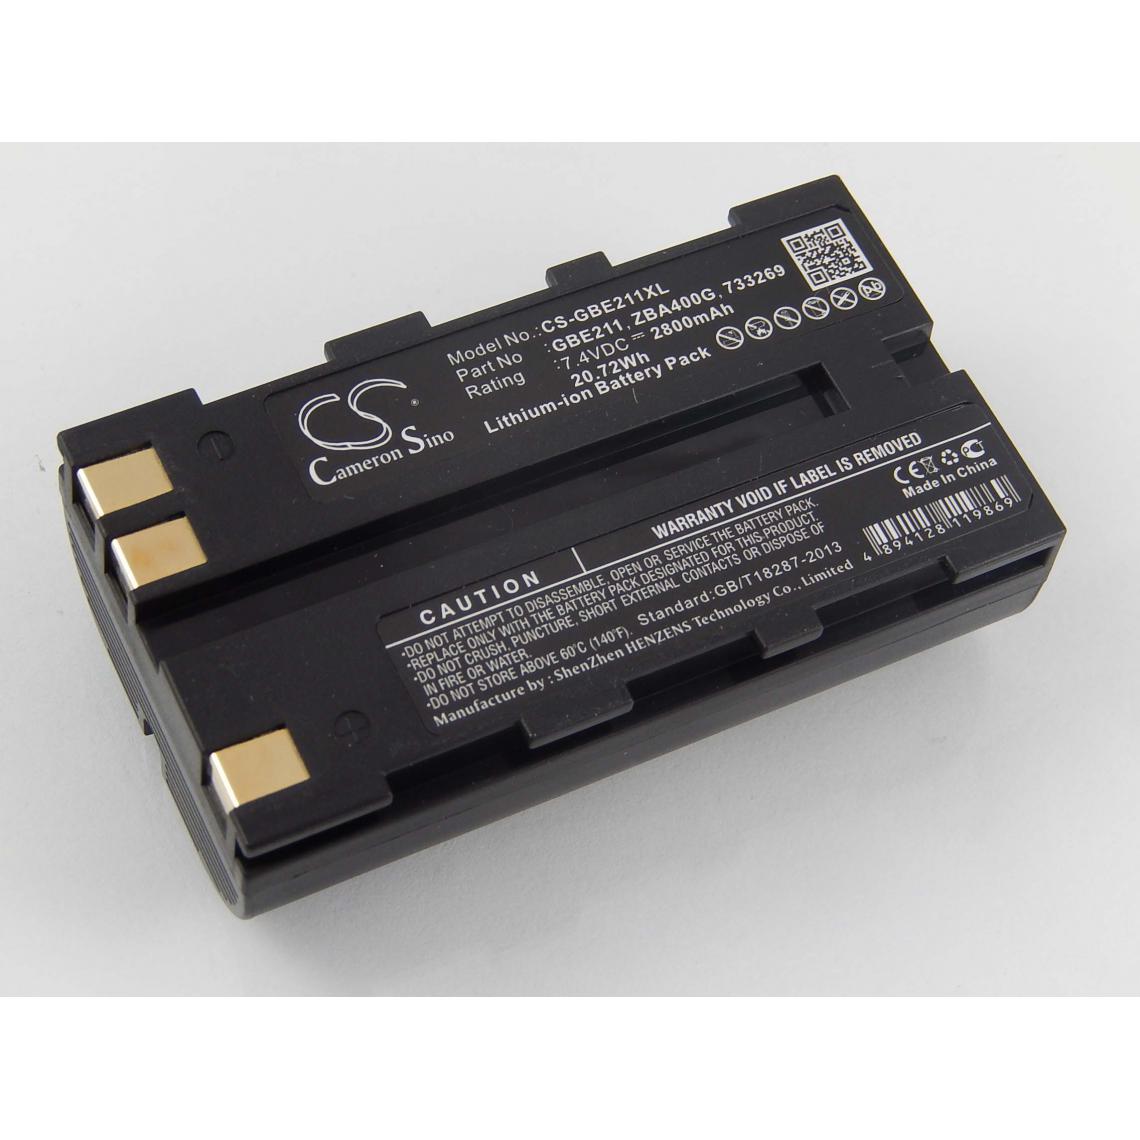 Vhbw - vhbw Batterie compatible avec Leica TPS1100, TPS1200, TPS300 dispositif de mesure laser, outil de mesure (2800mAh, 7,4V, Li-ion) - Piles rechargeables